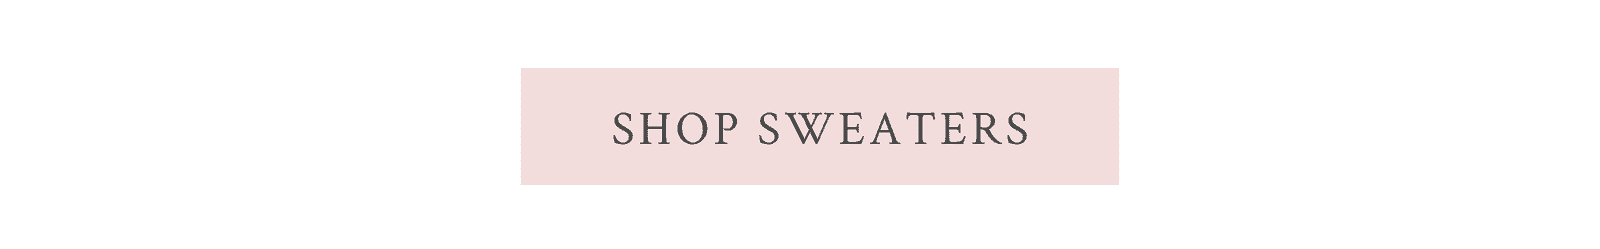 Shop sweatersz